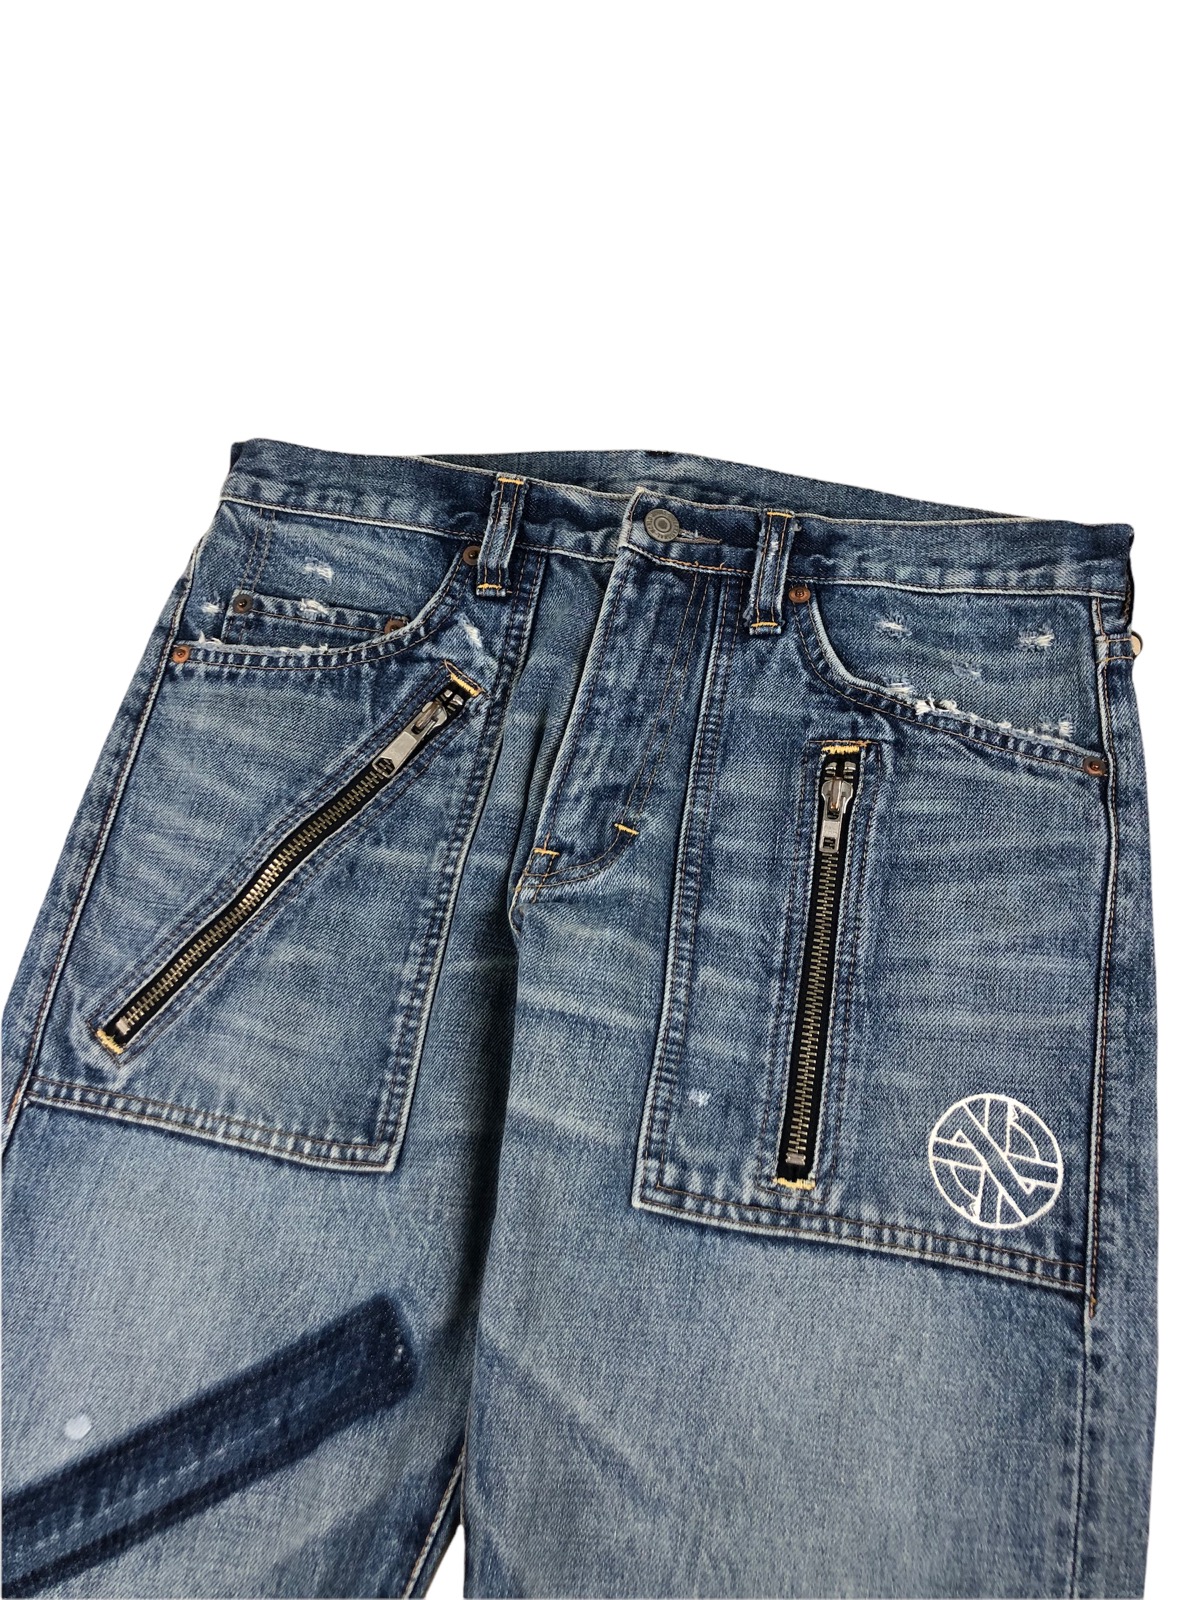 1990s RNA Multi zipper Seditionaries Punk Style Jeans - 5